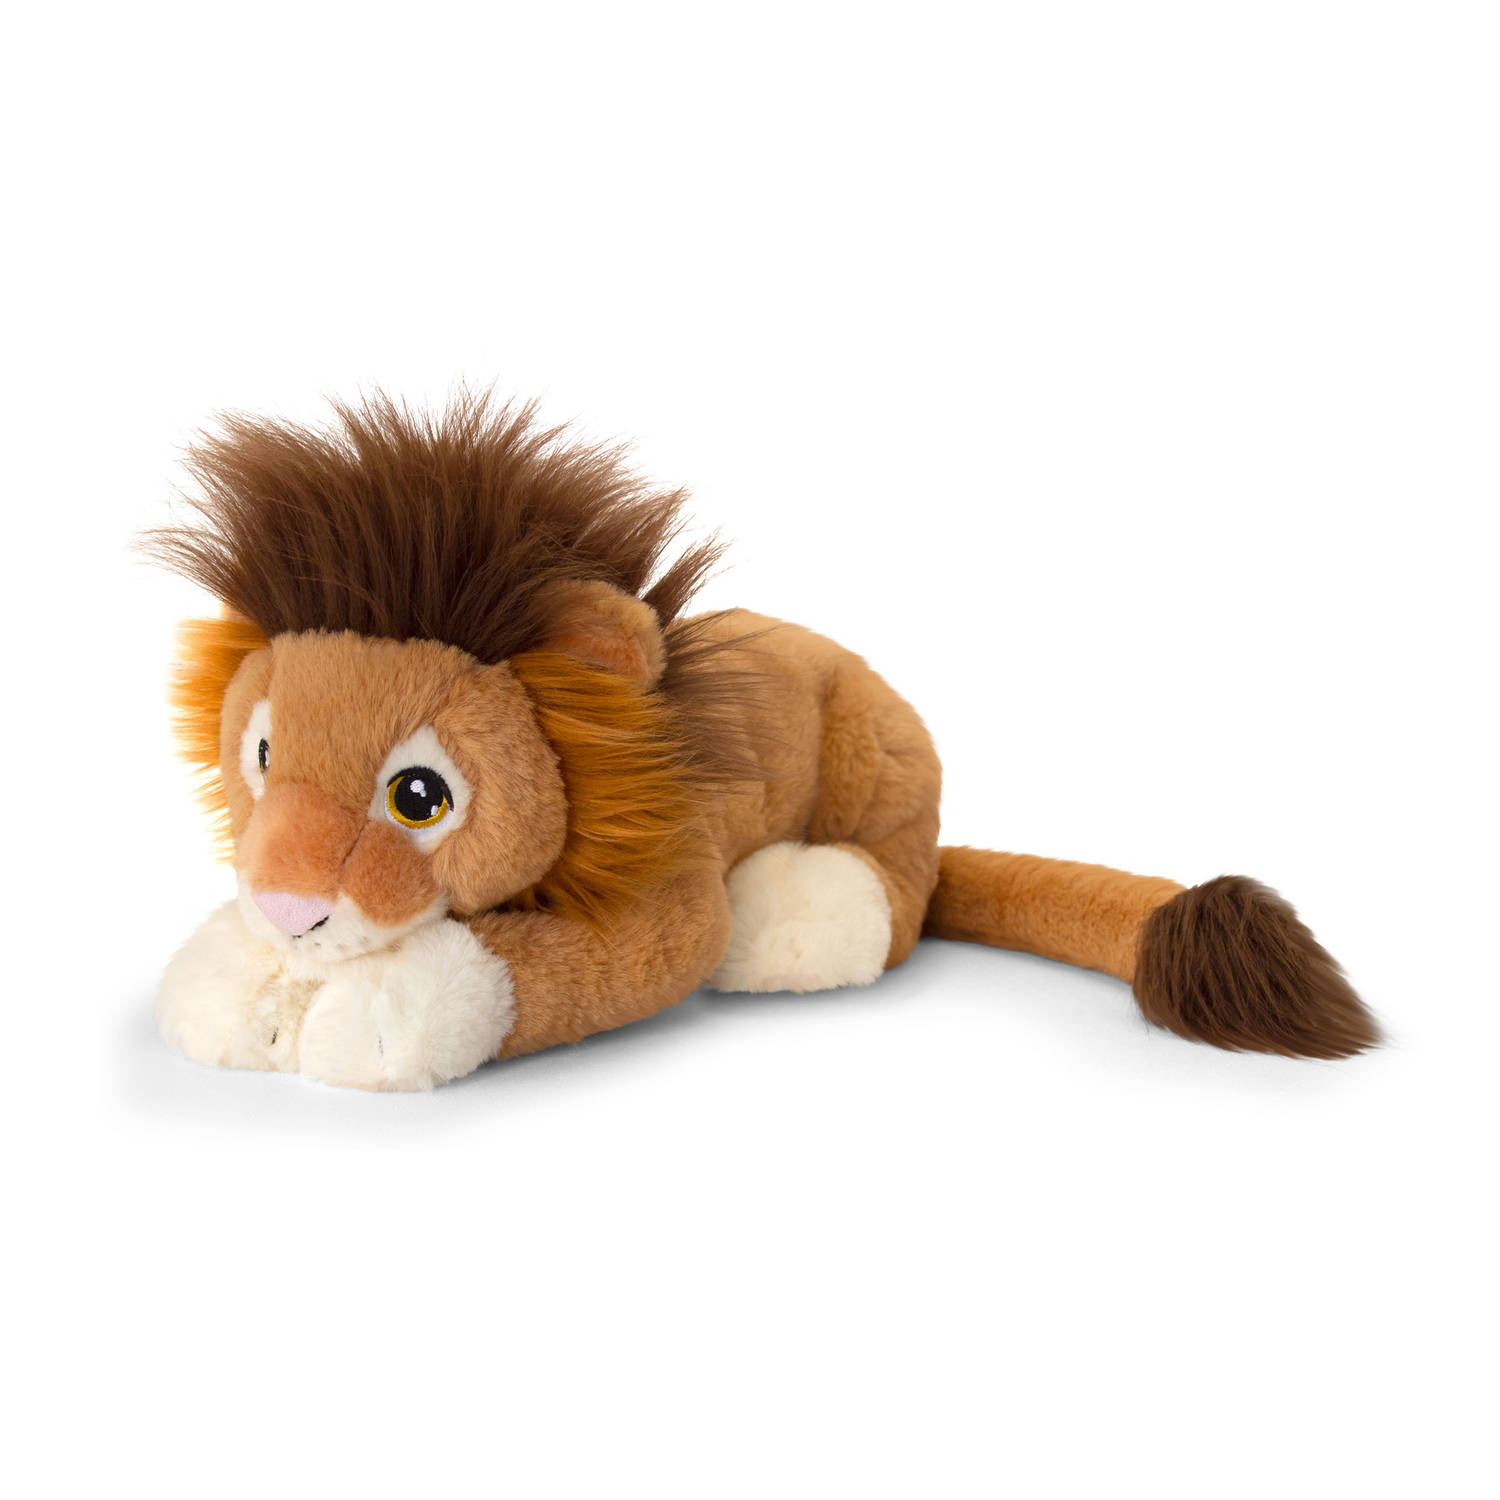 Pluche knuffel dieren leeuw 35 cm - Knuffelbeesten leeuwen speelgoed